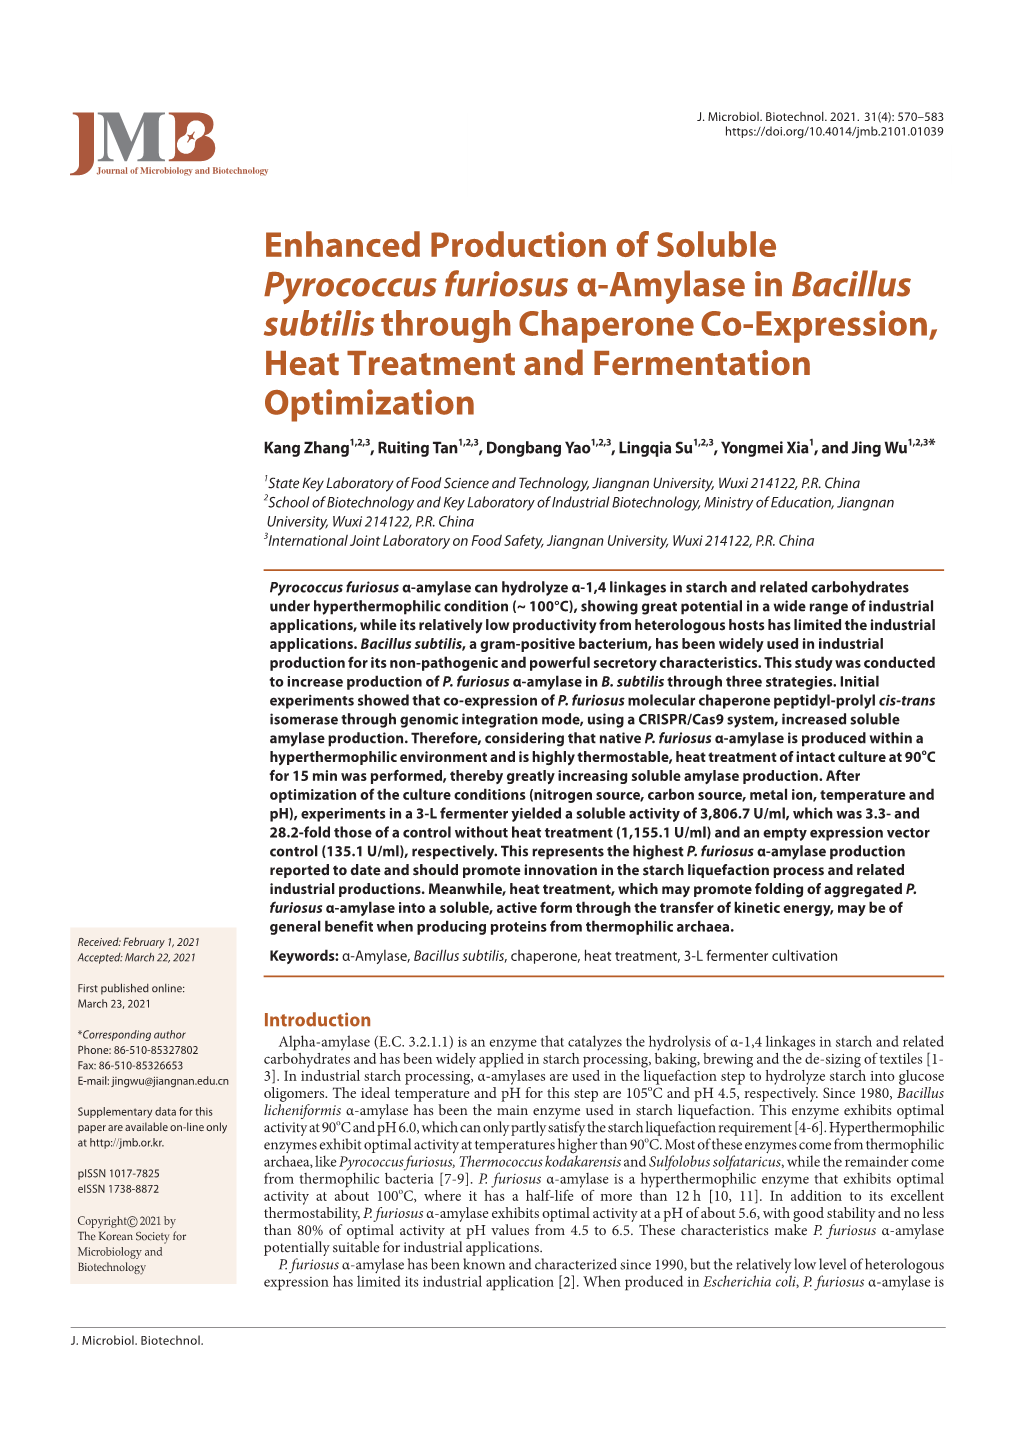 Enhanced Production of Soluble Pyrococcus Furiosus Α-Amylase in Bacillus Subtilisthrough Chaperone Co-Expression, Heat Treatmen